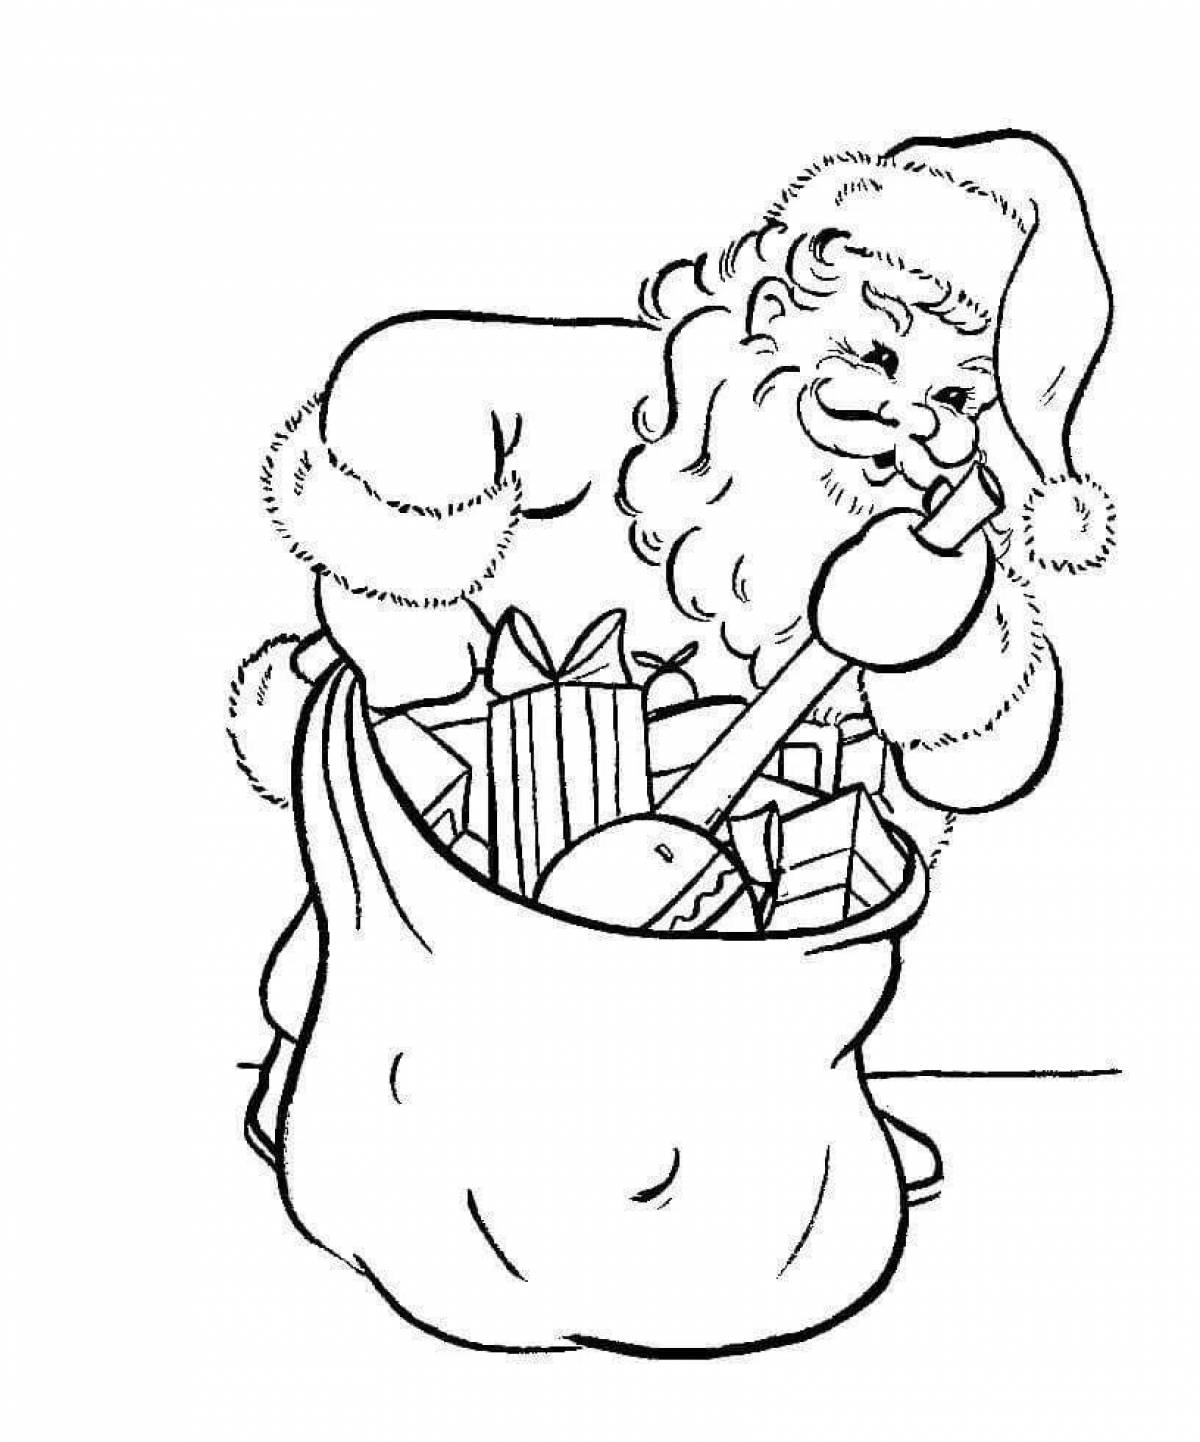 Coloring Santa Claus with a bag